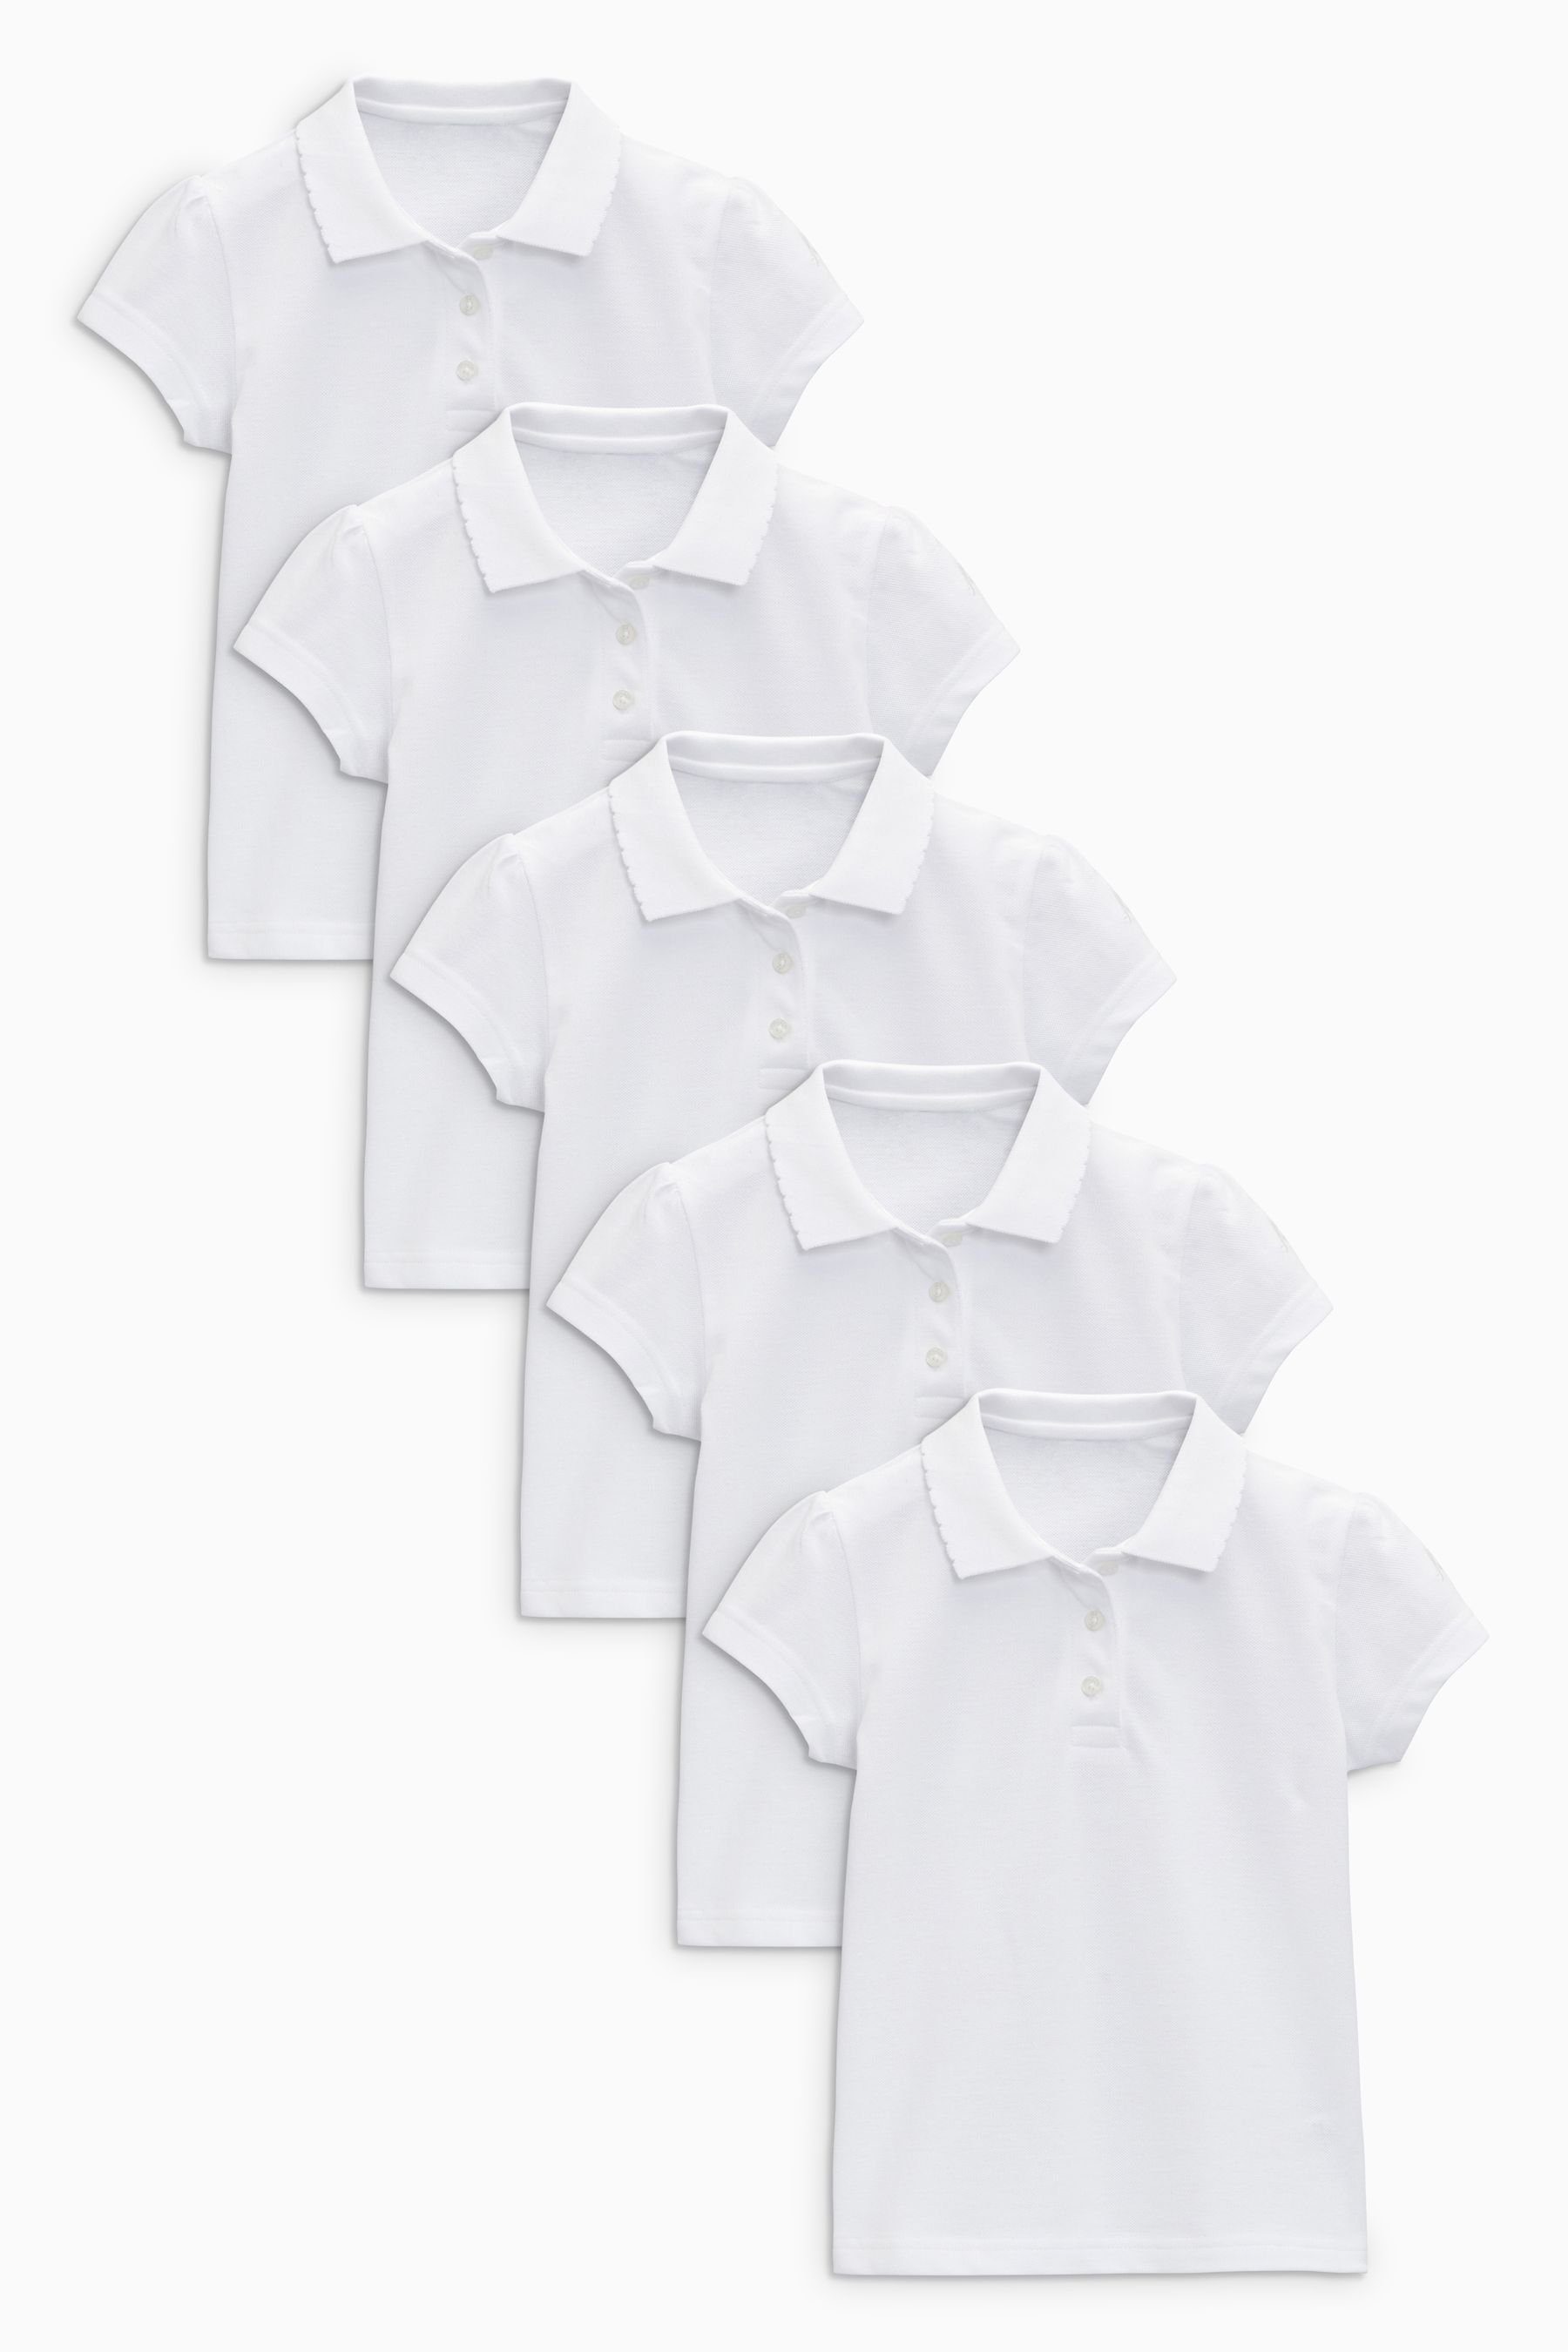 Next Poloshirt 5 Kurzärmelige Polohemden Baumwolle Slim Fit (5-tlg)